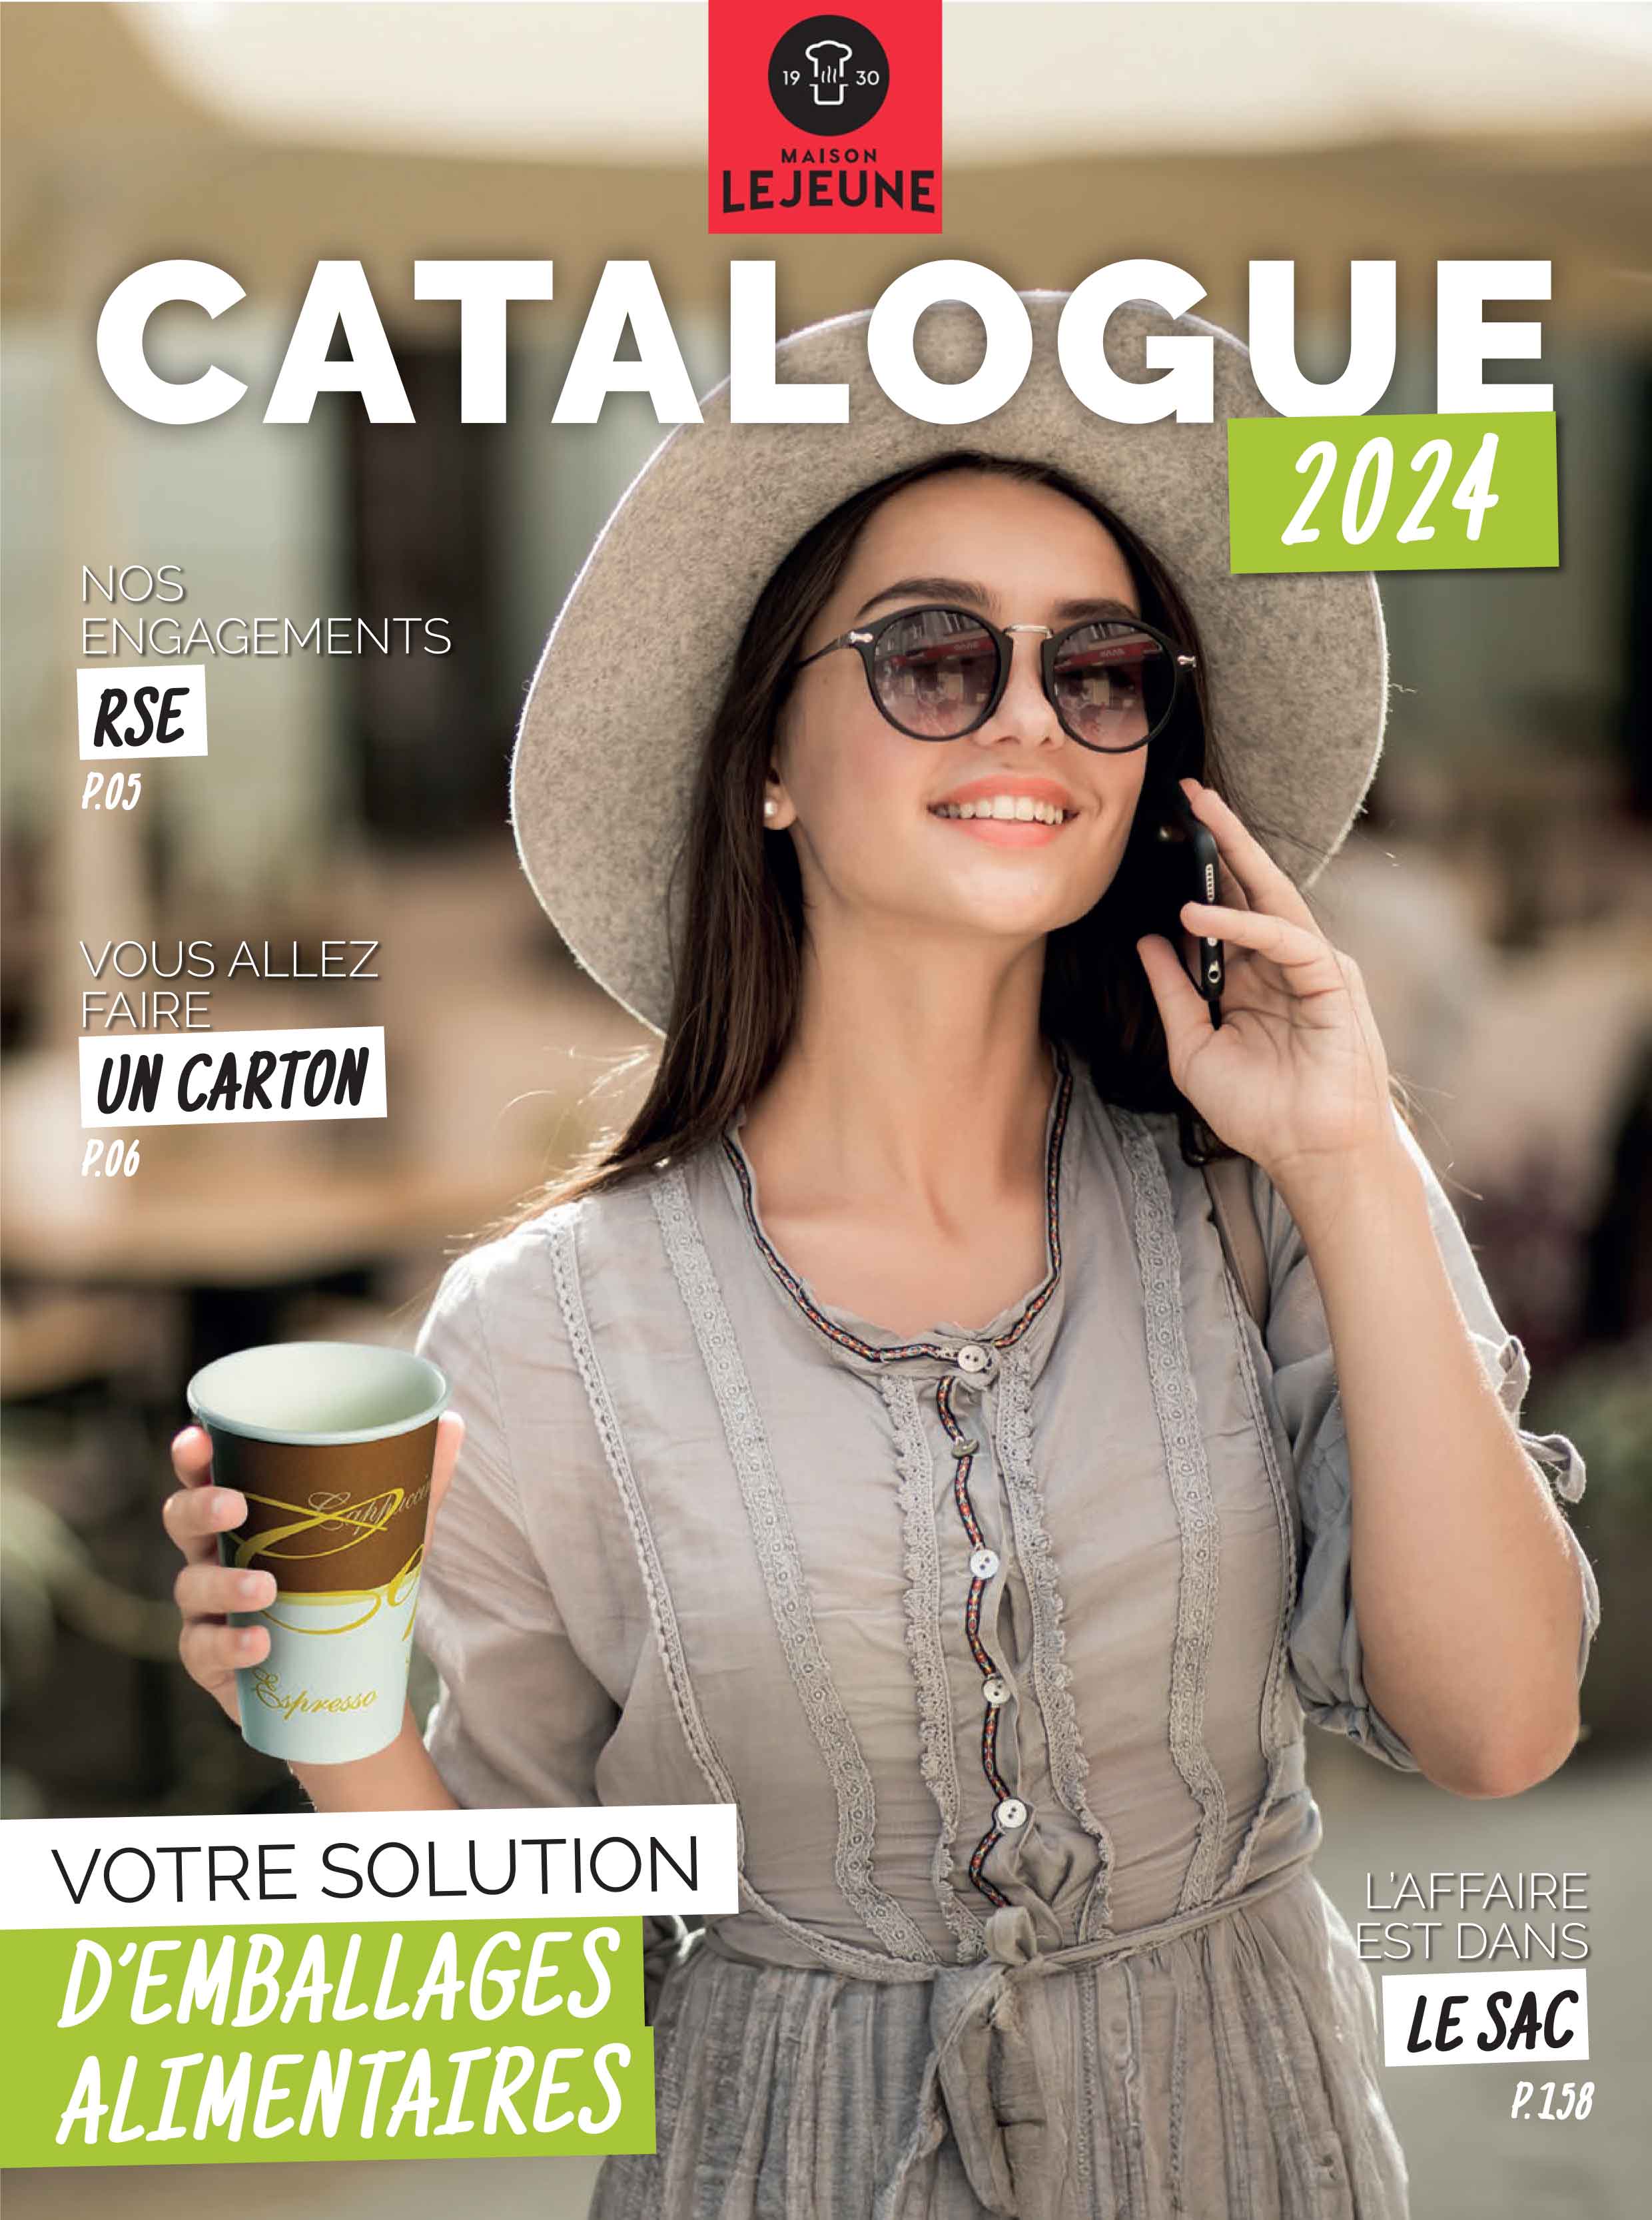 Catalogue emballage 2024 Maison Lejeune